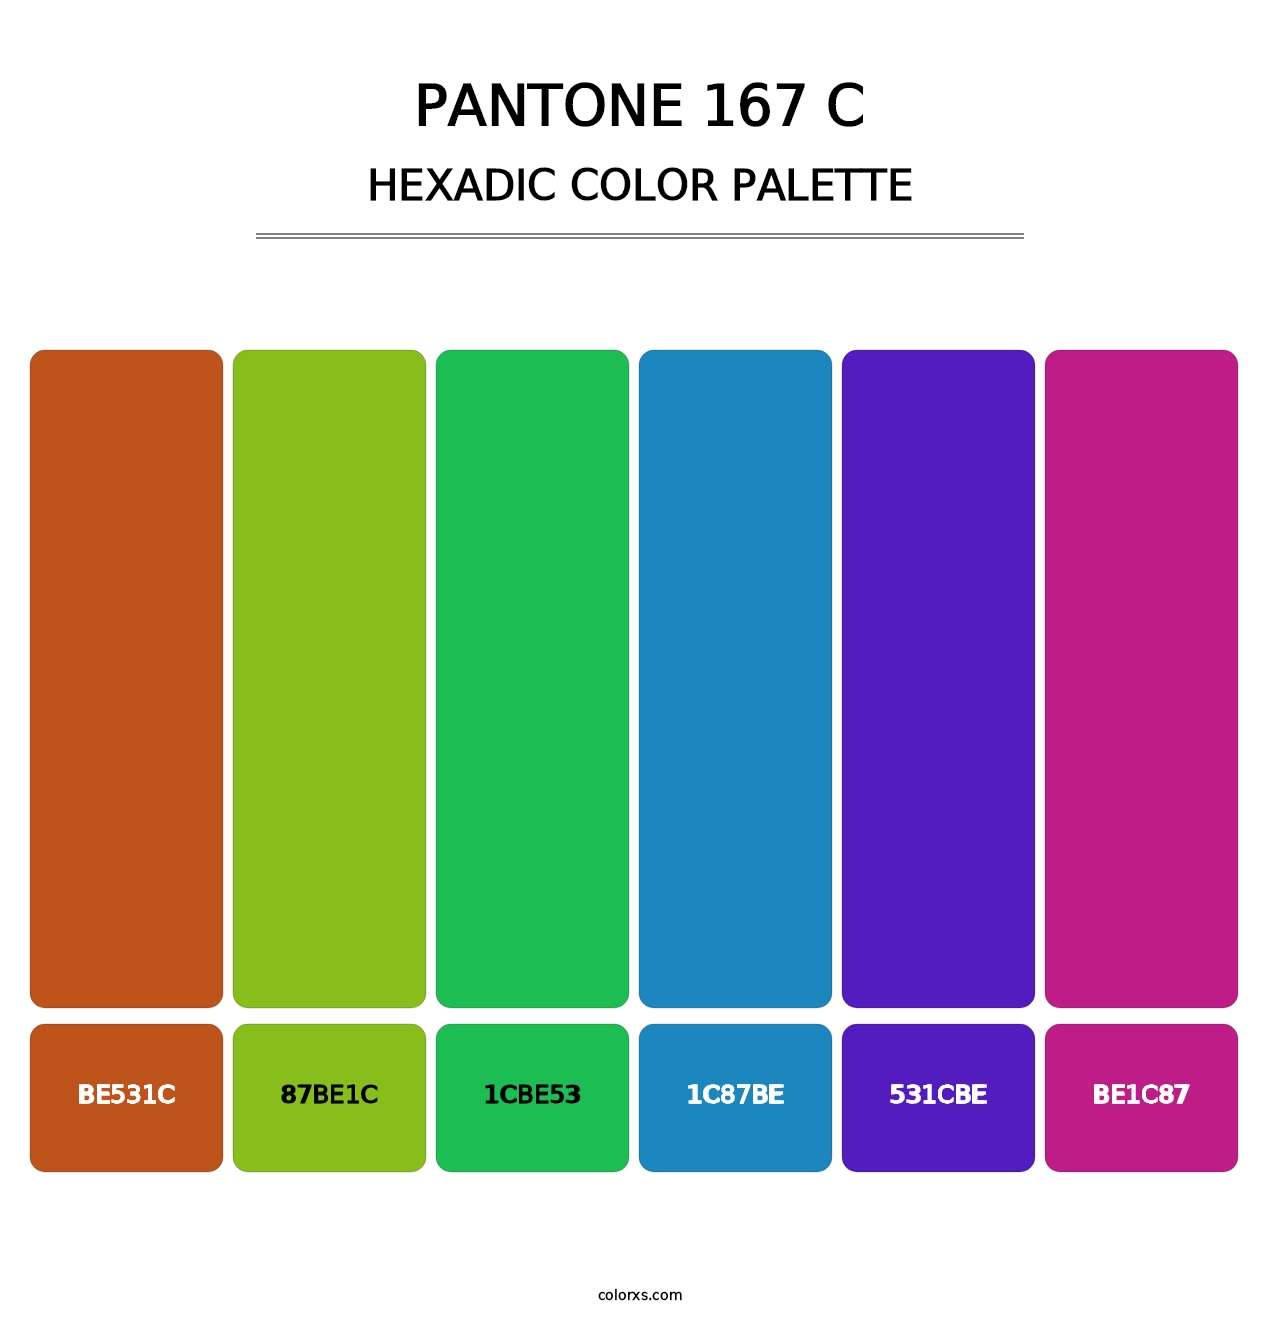 PANTONE 167 C - Hexadic Color Palette